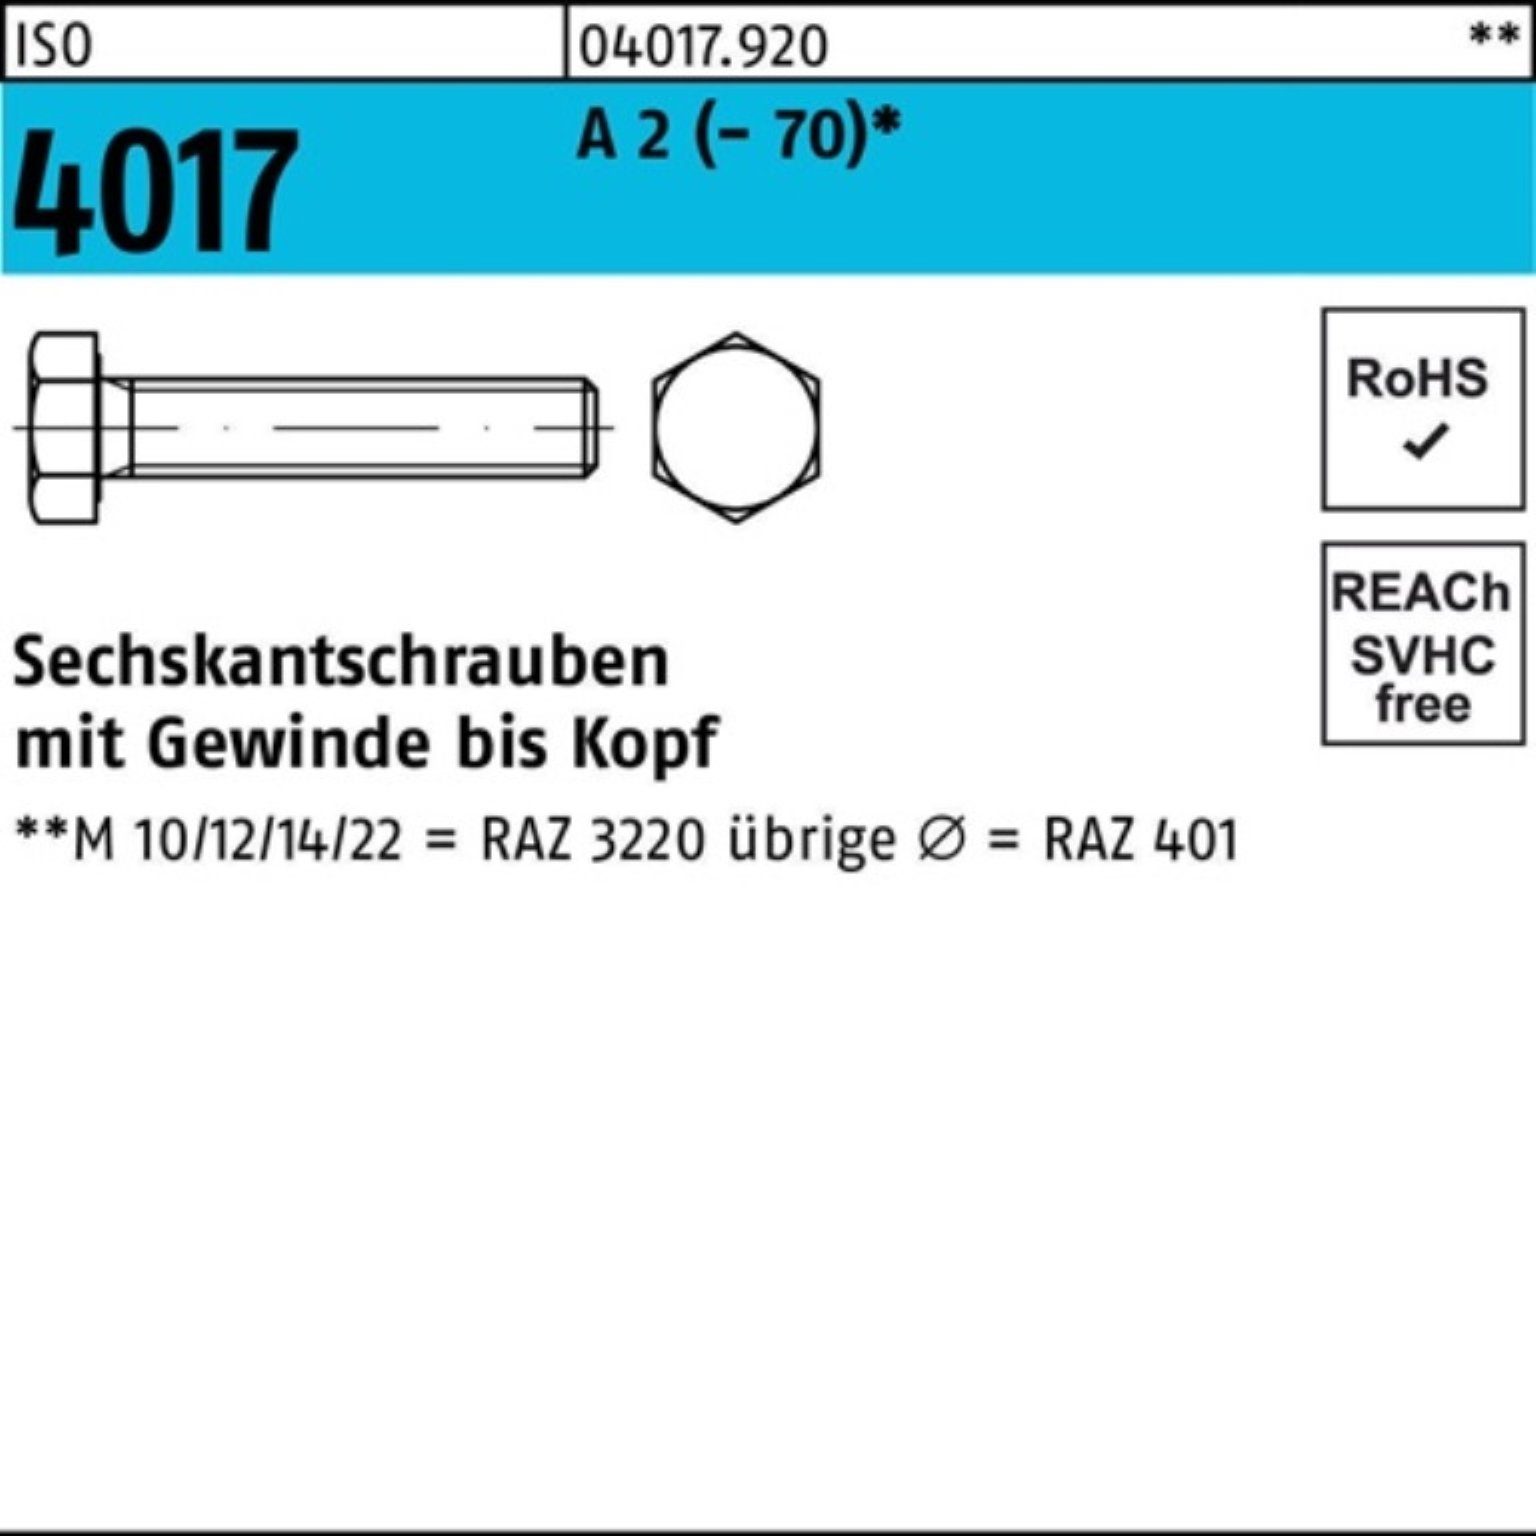 [Besonderheit, Qualitätsprodukte] Bufab Sechskantschraube 200er A VG 22 Stück 4017 ISO 200 M6x 2 (70) Pack Sechskantschraube